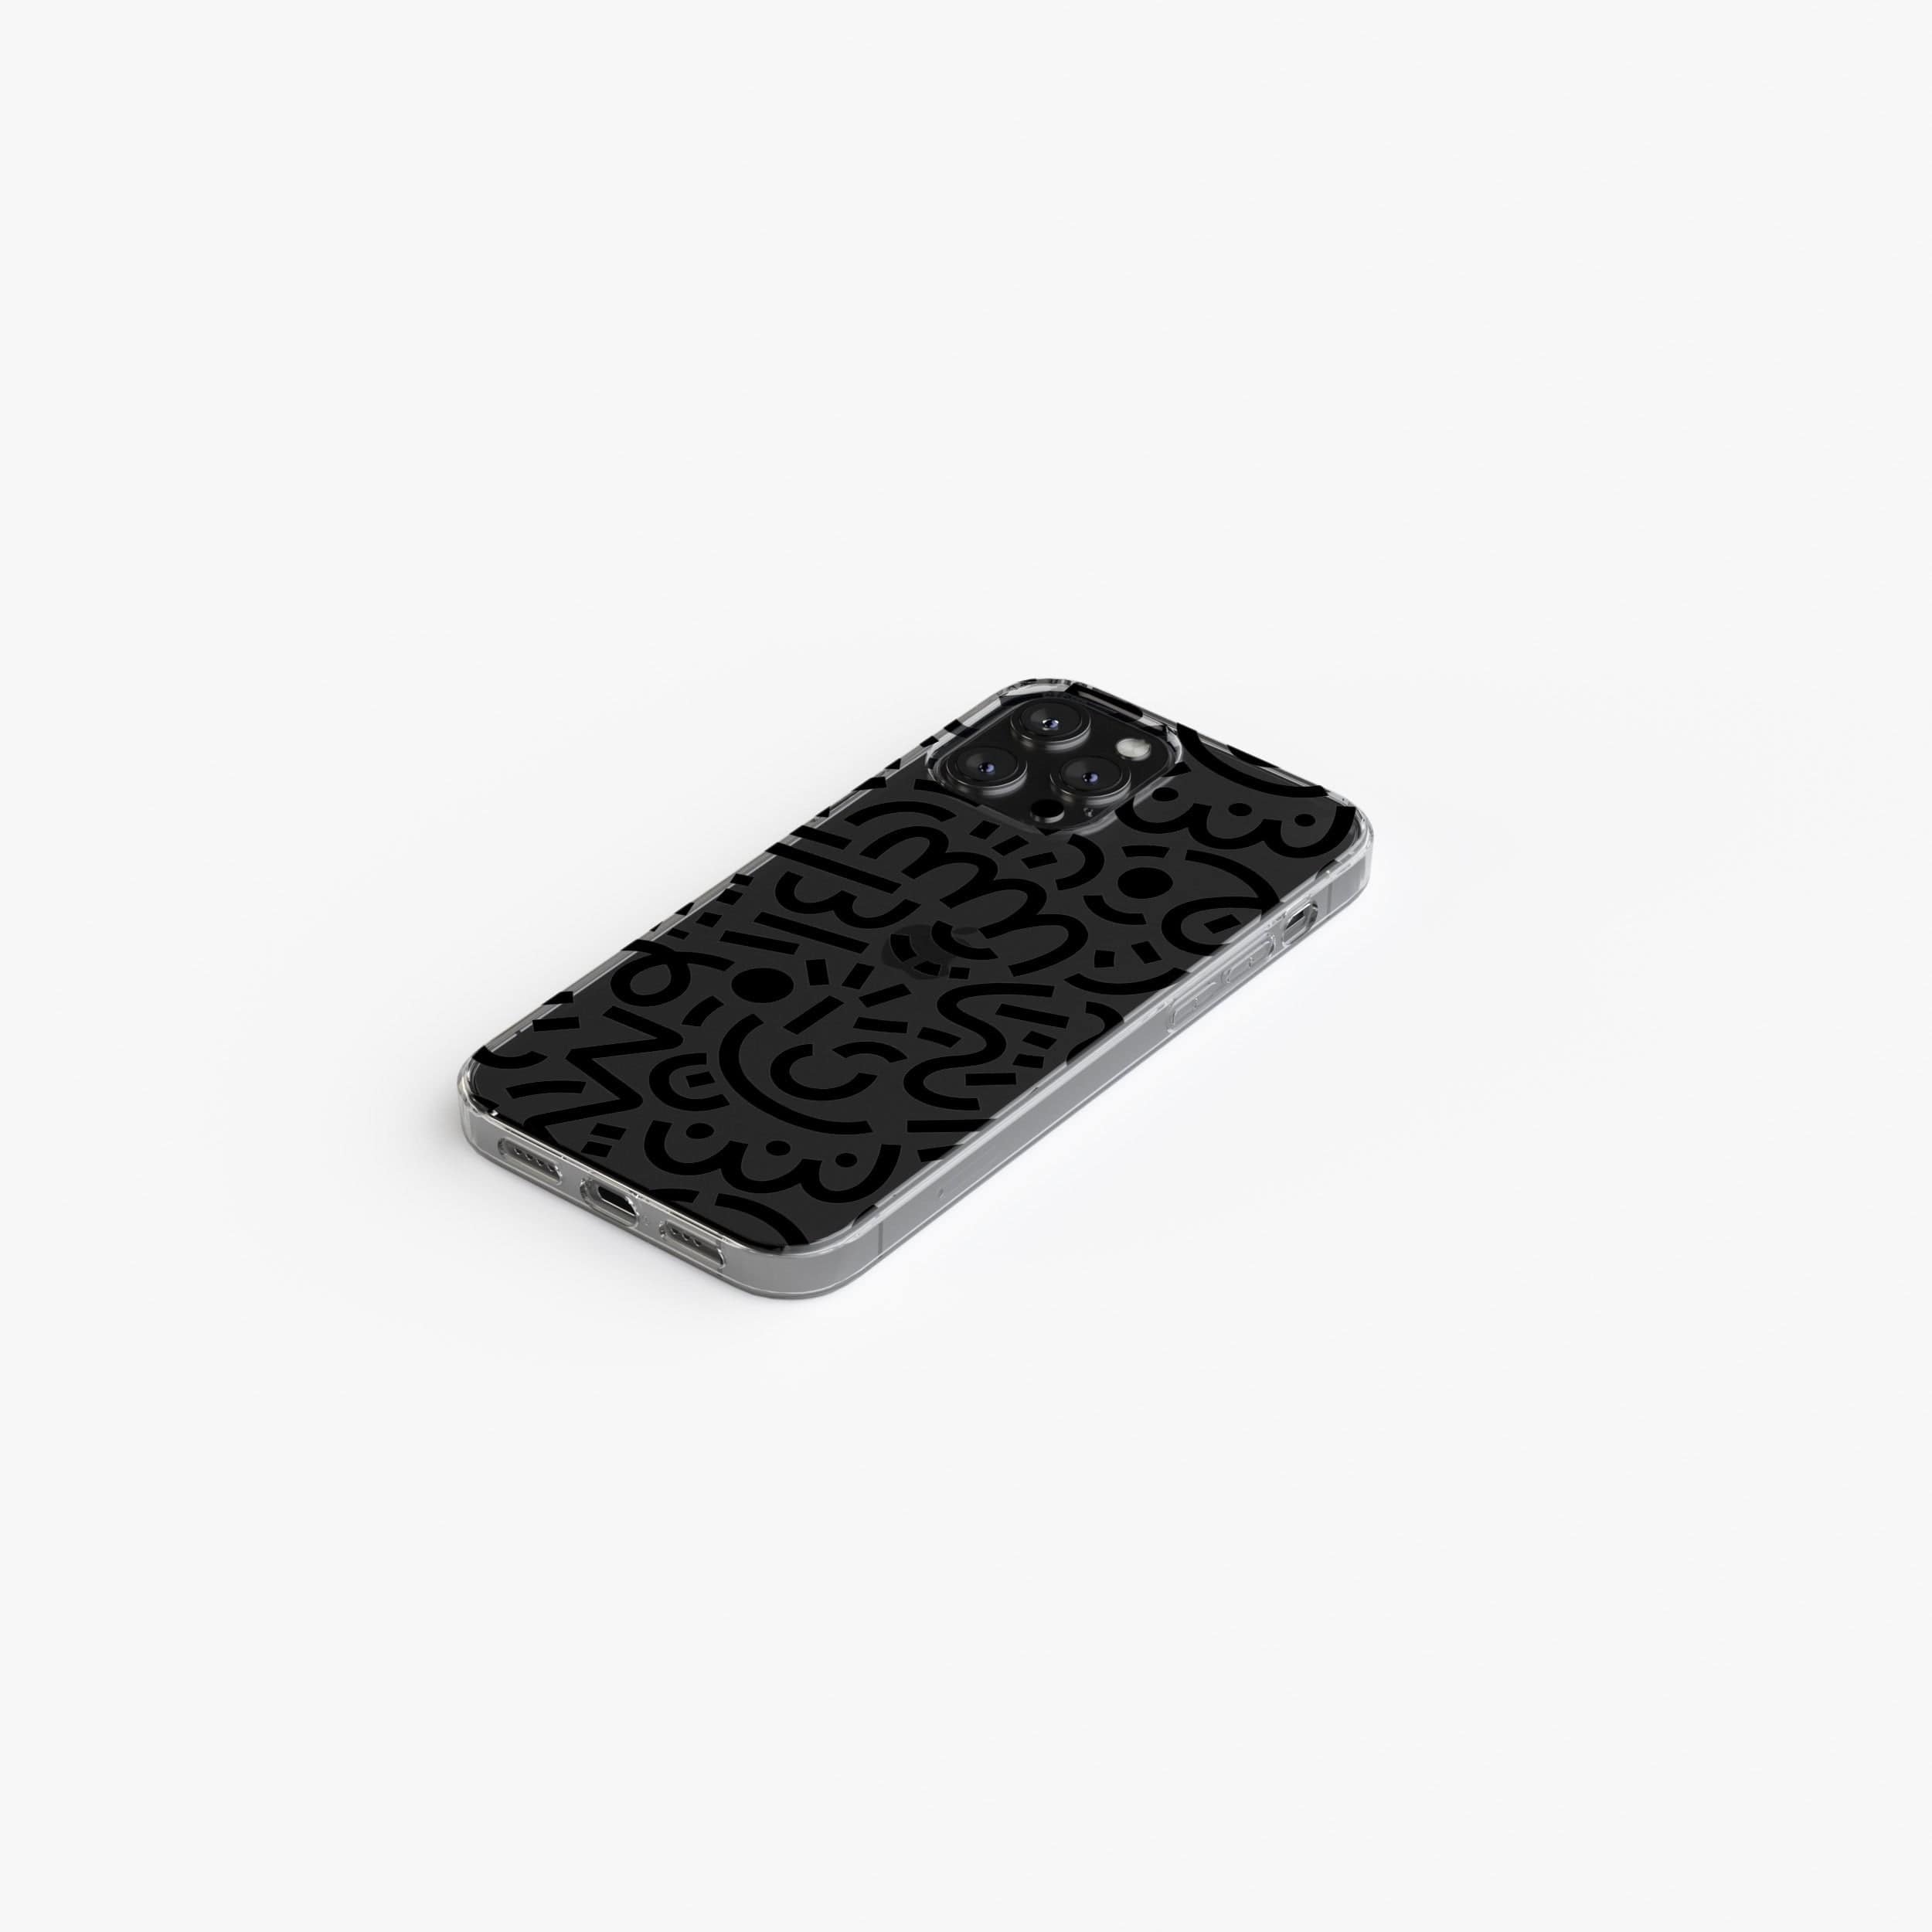 Transparent silicone case "Black patterns"